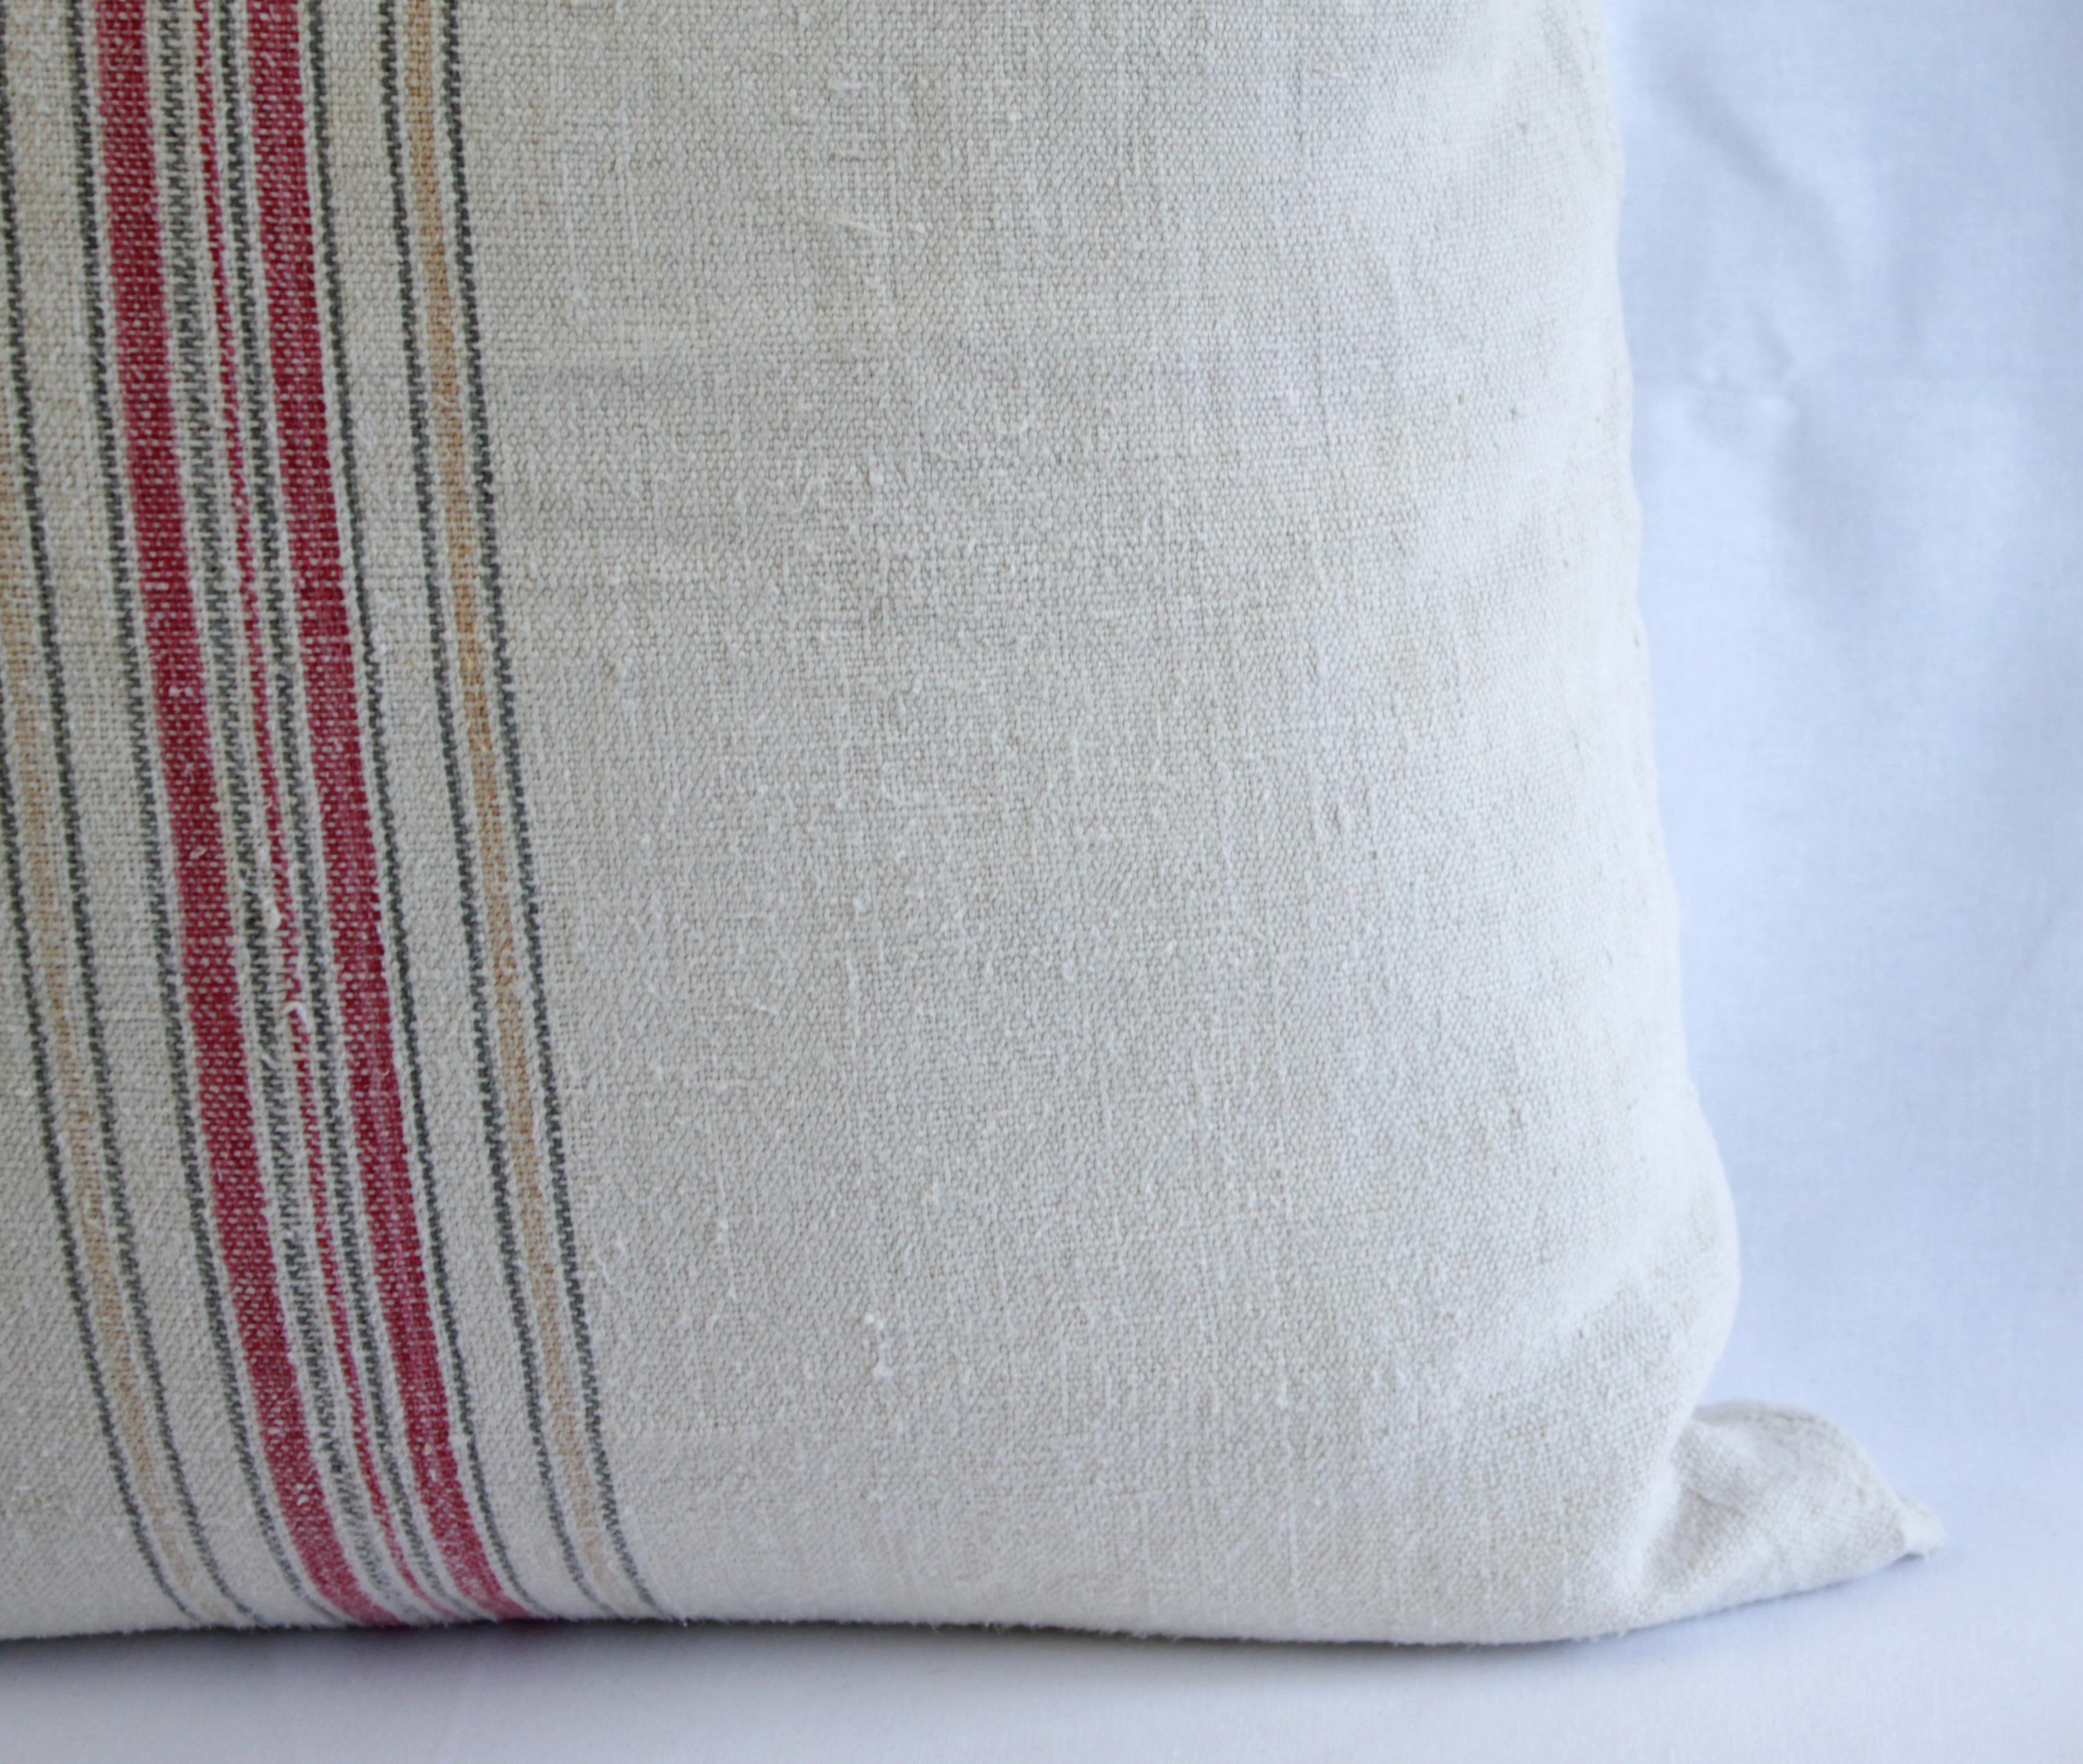 Antique Nubby 19th Century European Red and Tan Stripe Grain Sack Pillows 1